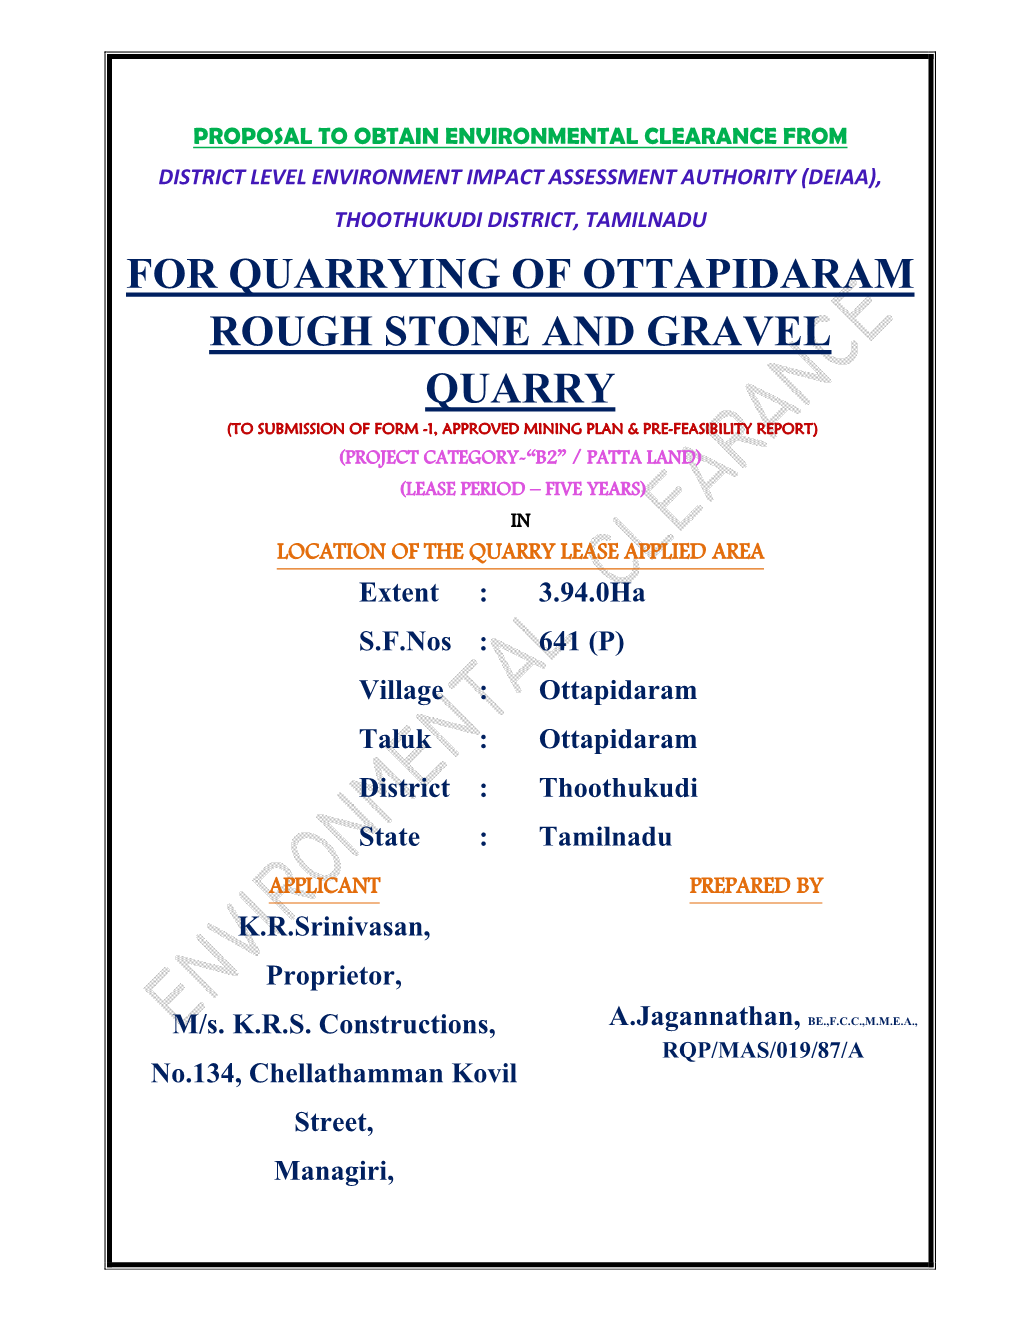 Ottapidaram District : Thoothukudi State : Tamilnadu